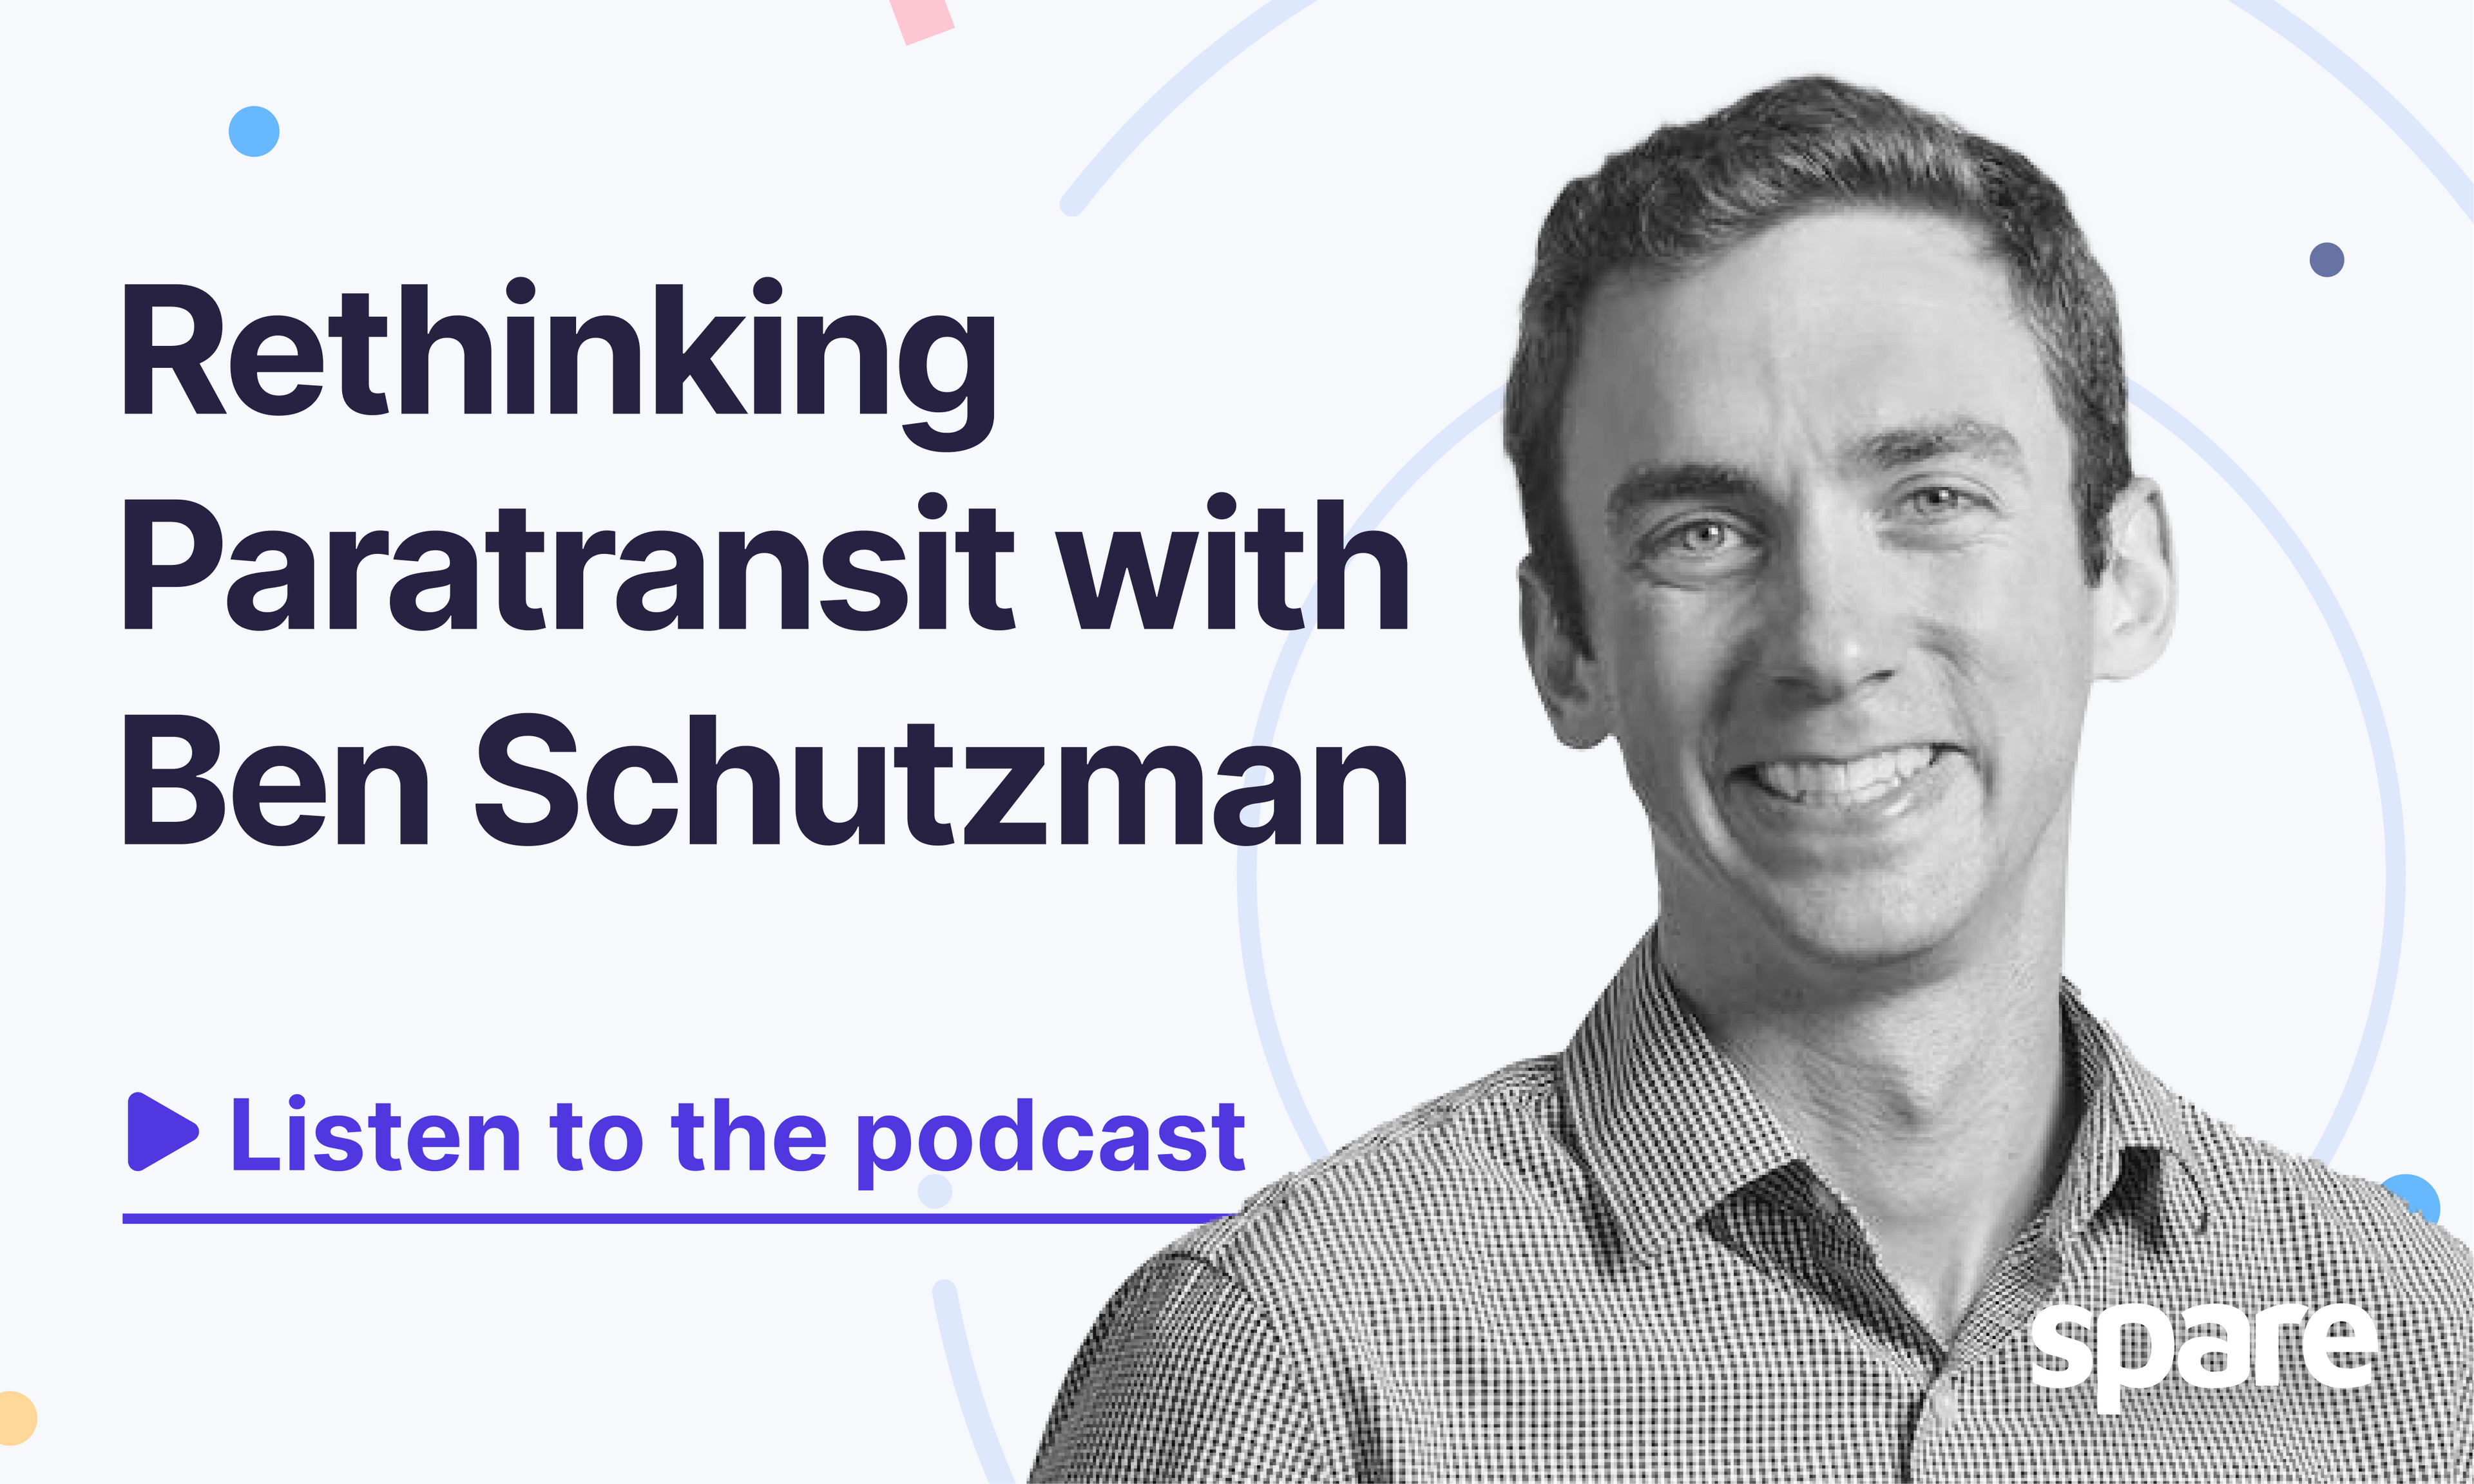 Podcast with Ben Schutzman